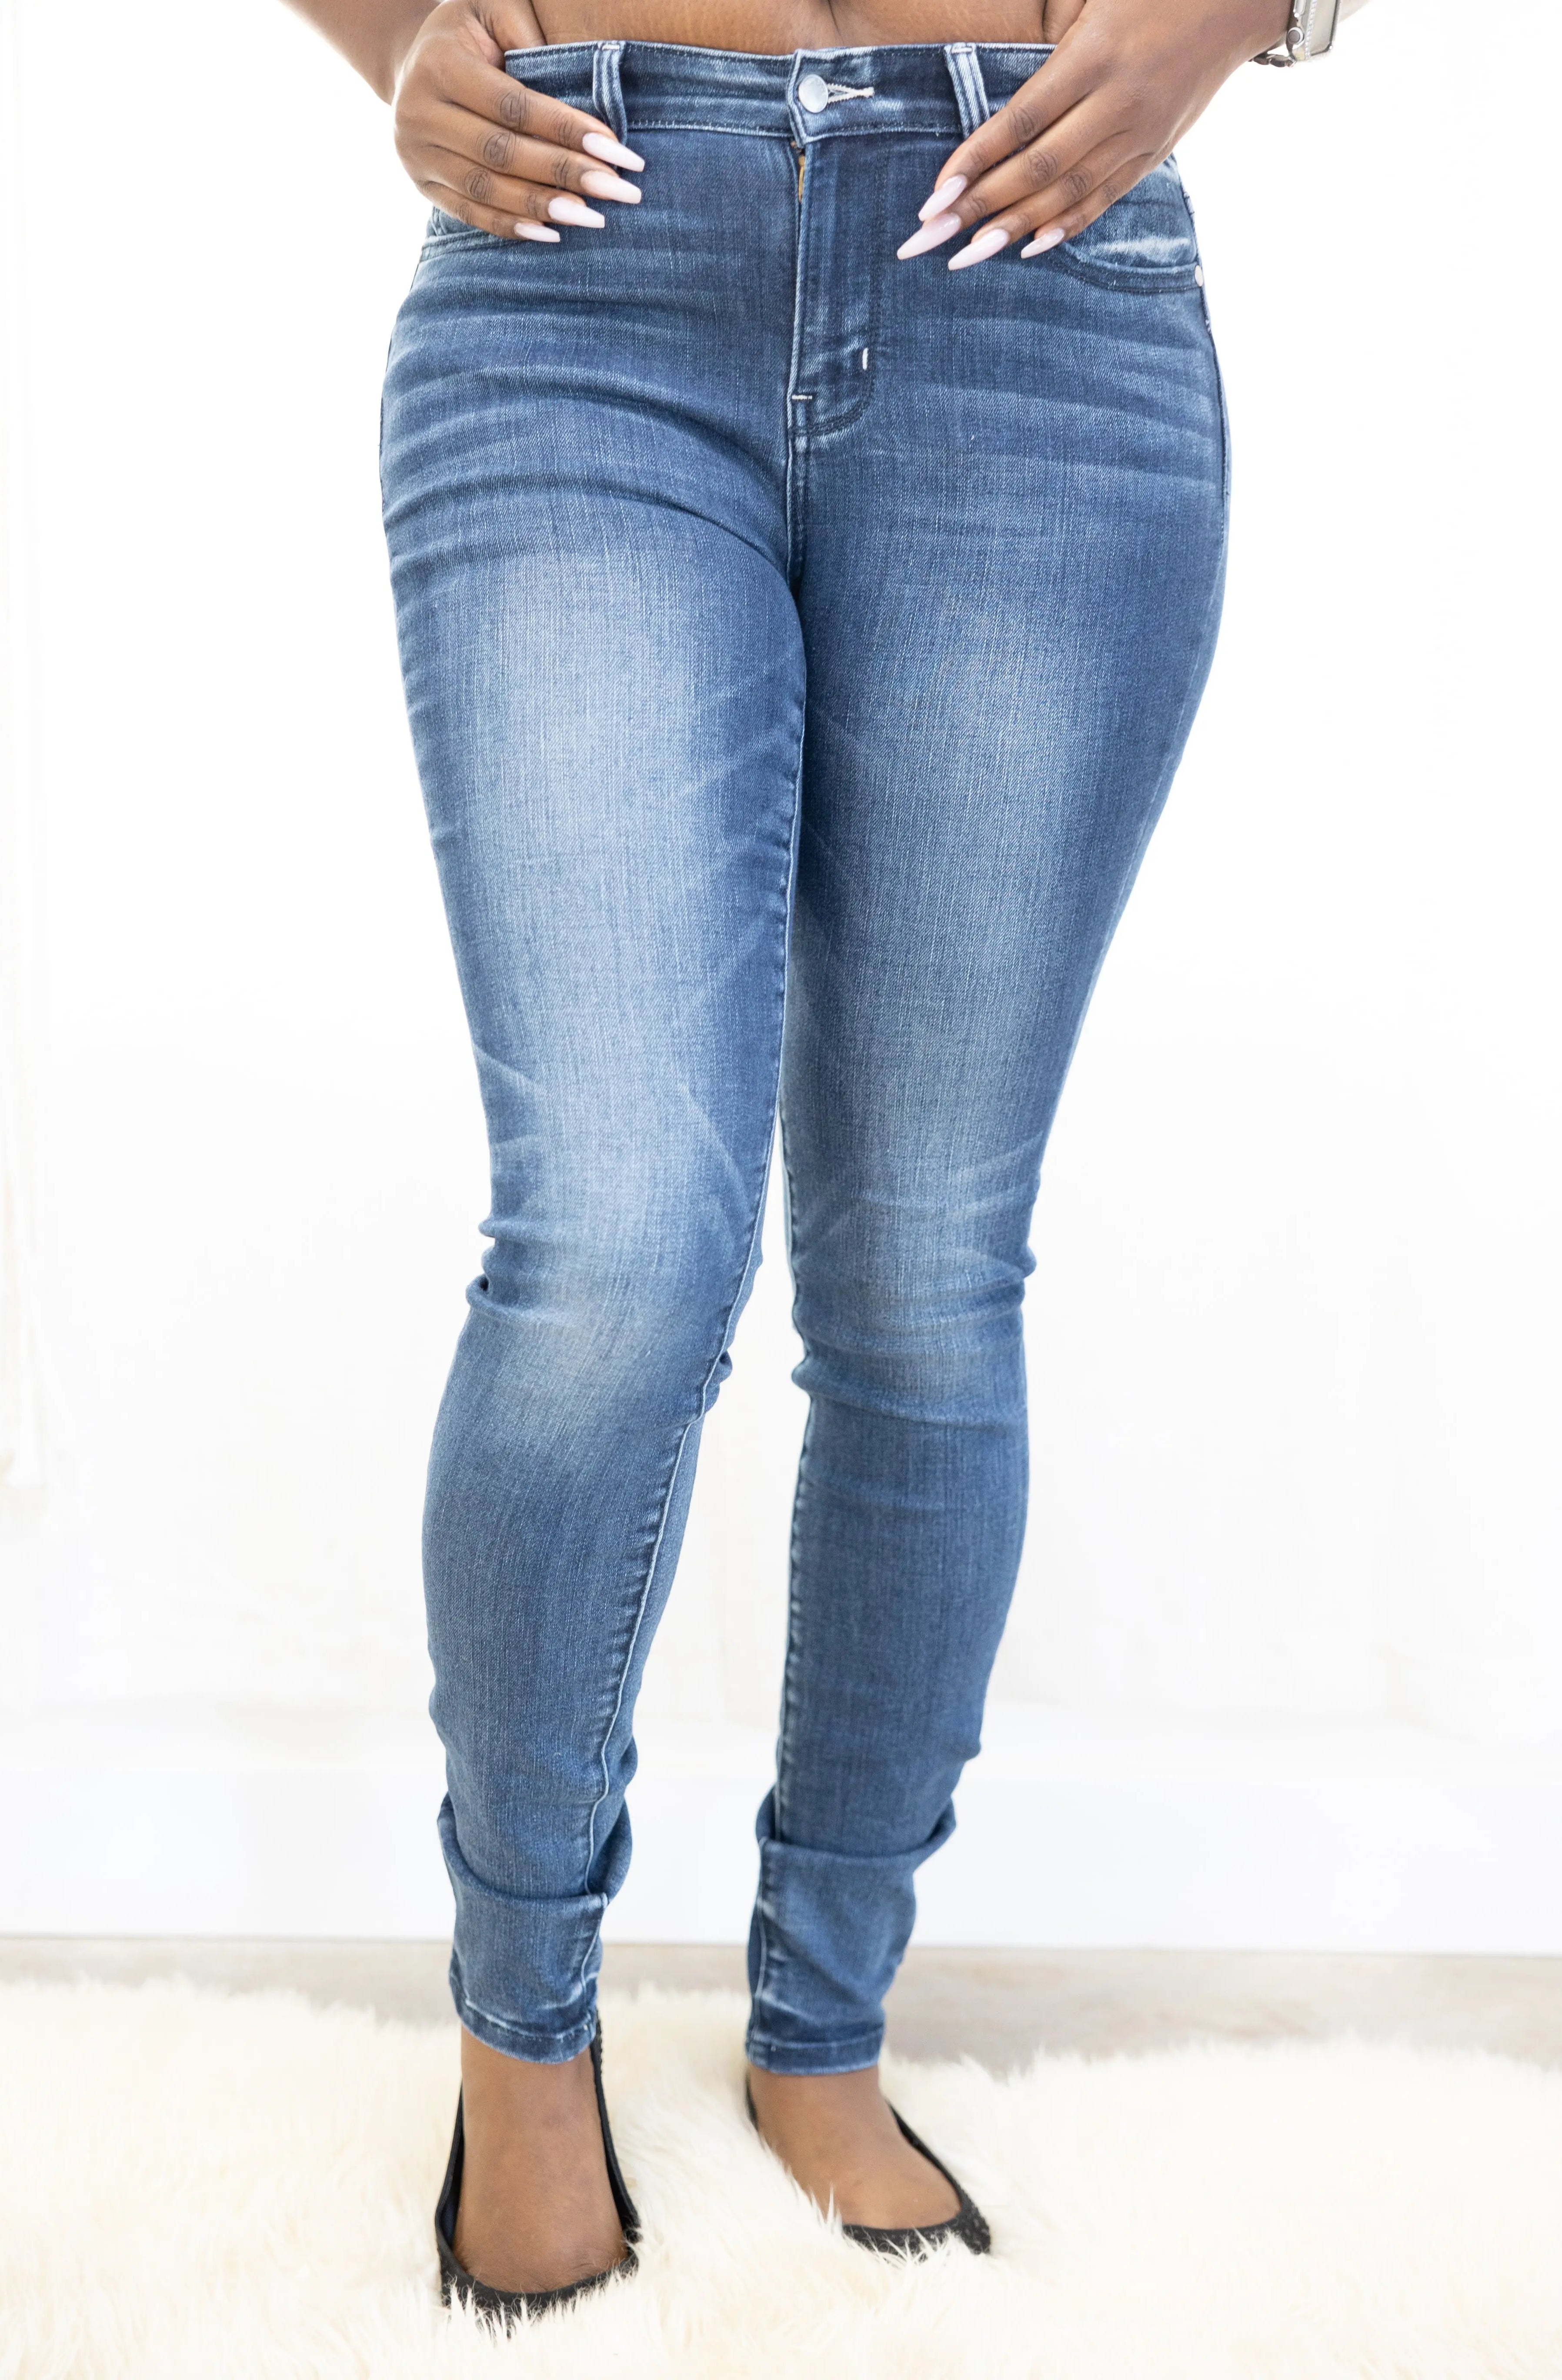 She's Got Legs - Tall Judy Blue Skinnies JB Boutique Simplified